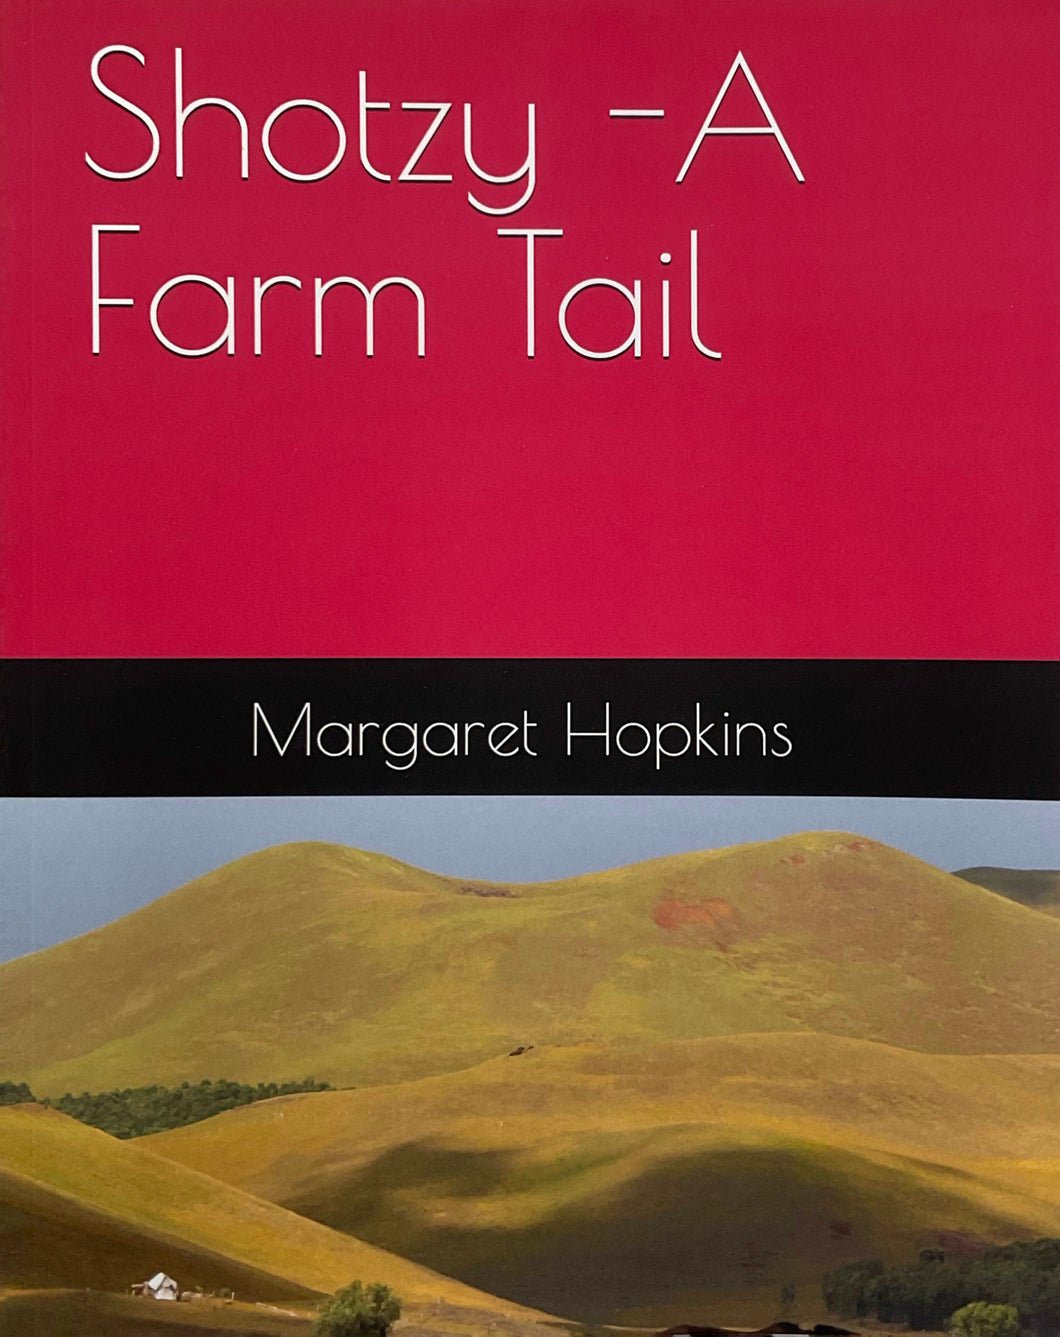 Shotzy - A Farm Tail